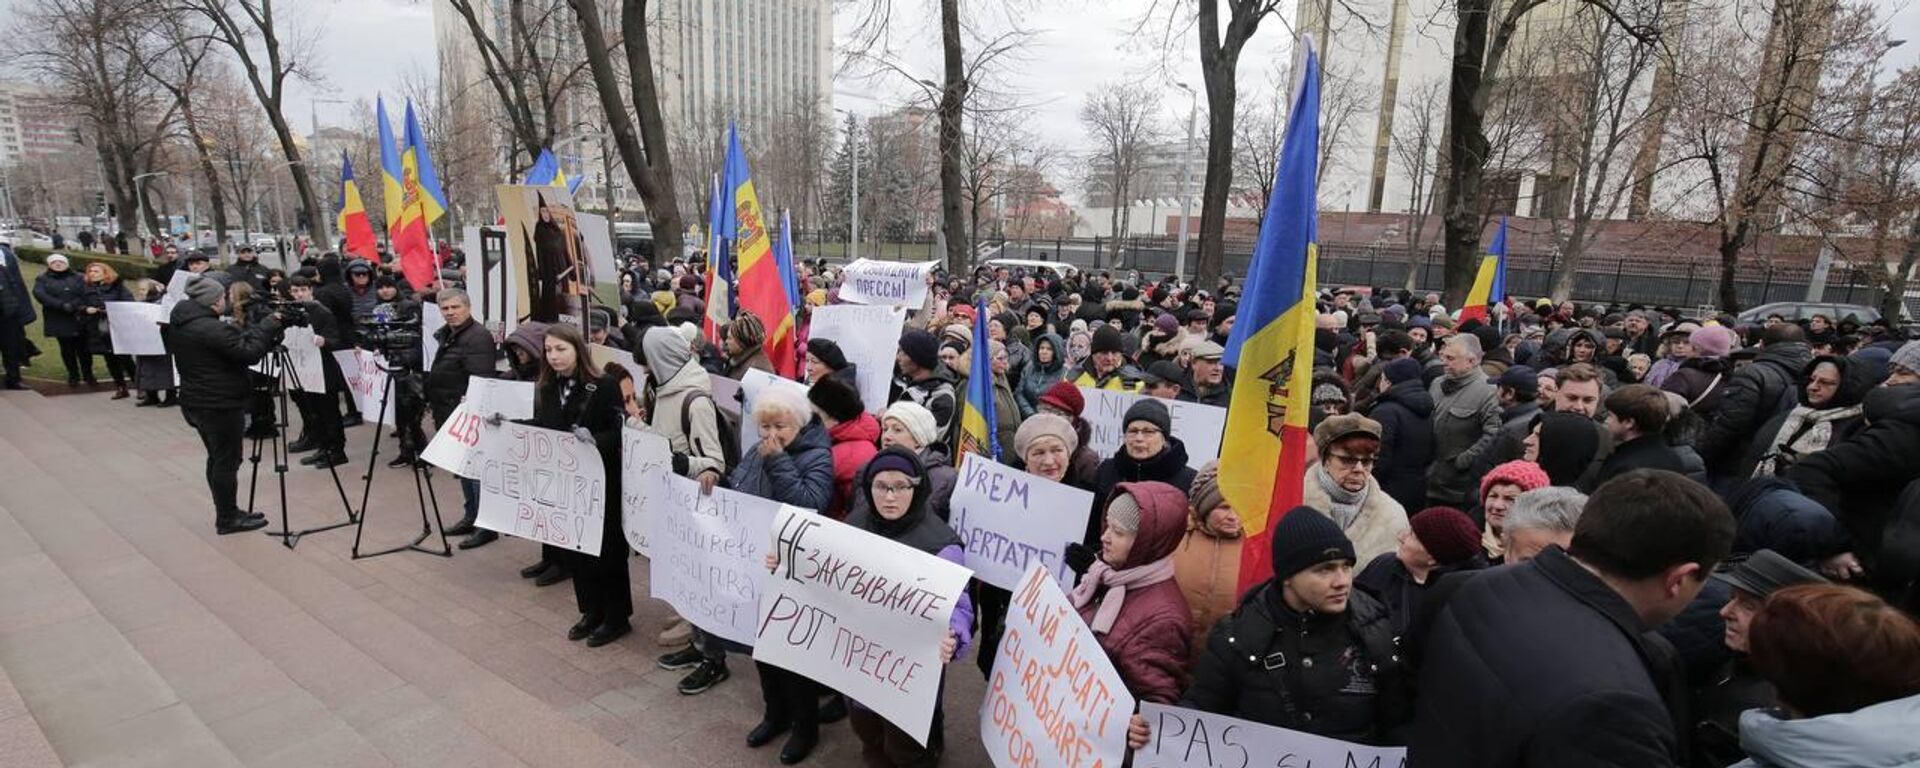 Протест против закрытия телеканалов в Молдове, 22.12.2022 - Sputnik Moldova, 1920, 22.12.2022